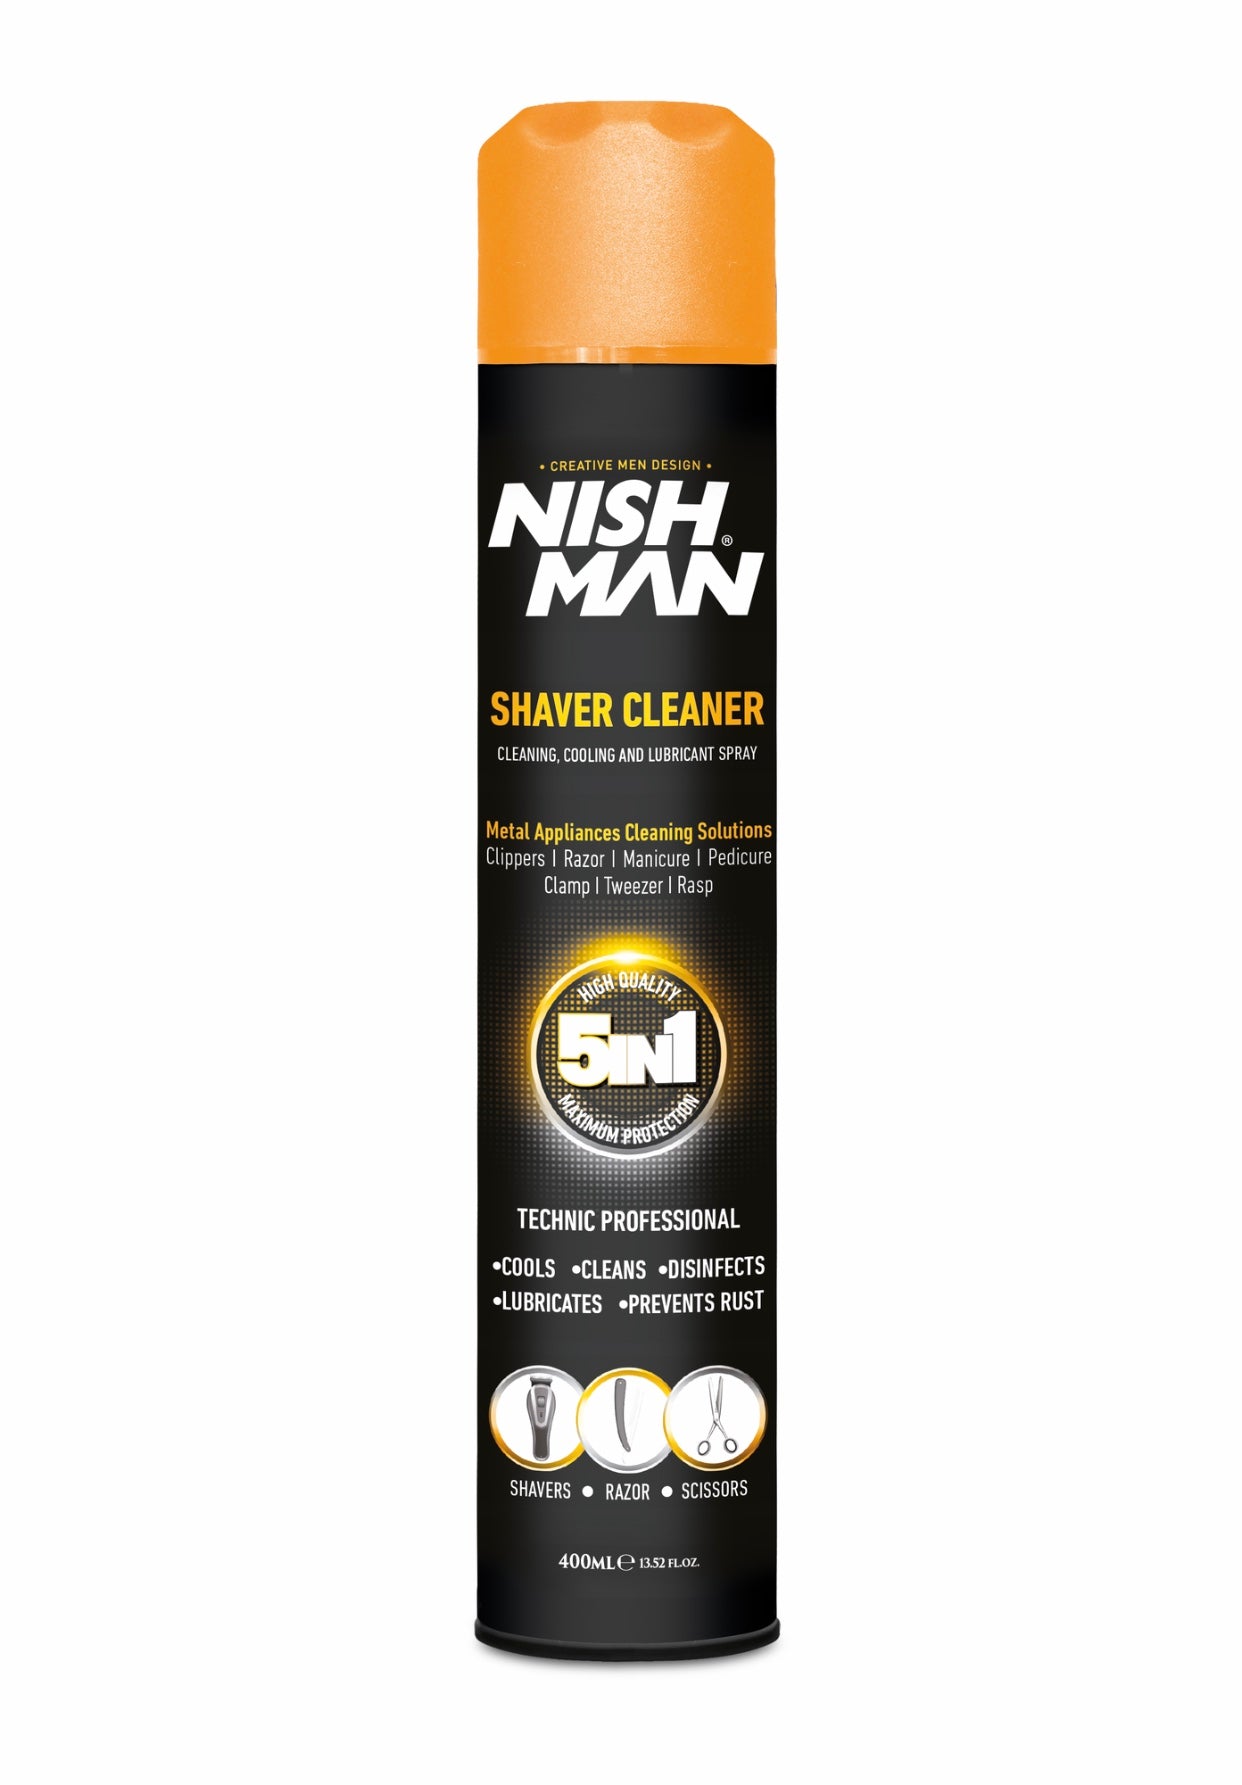 NISHMAN Shaver Cleaner - 5 IN 1